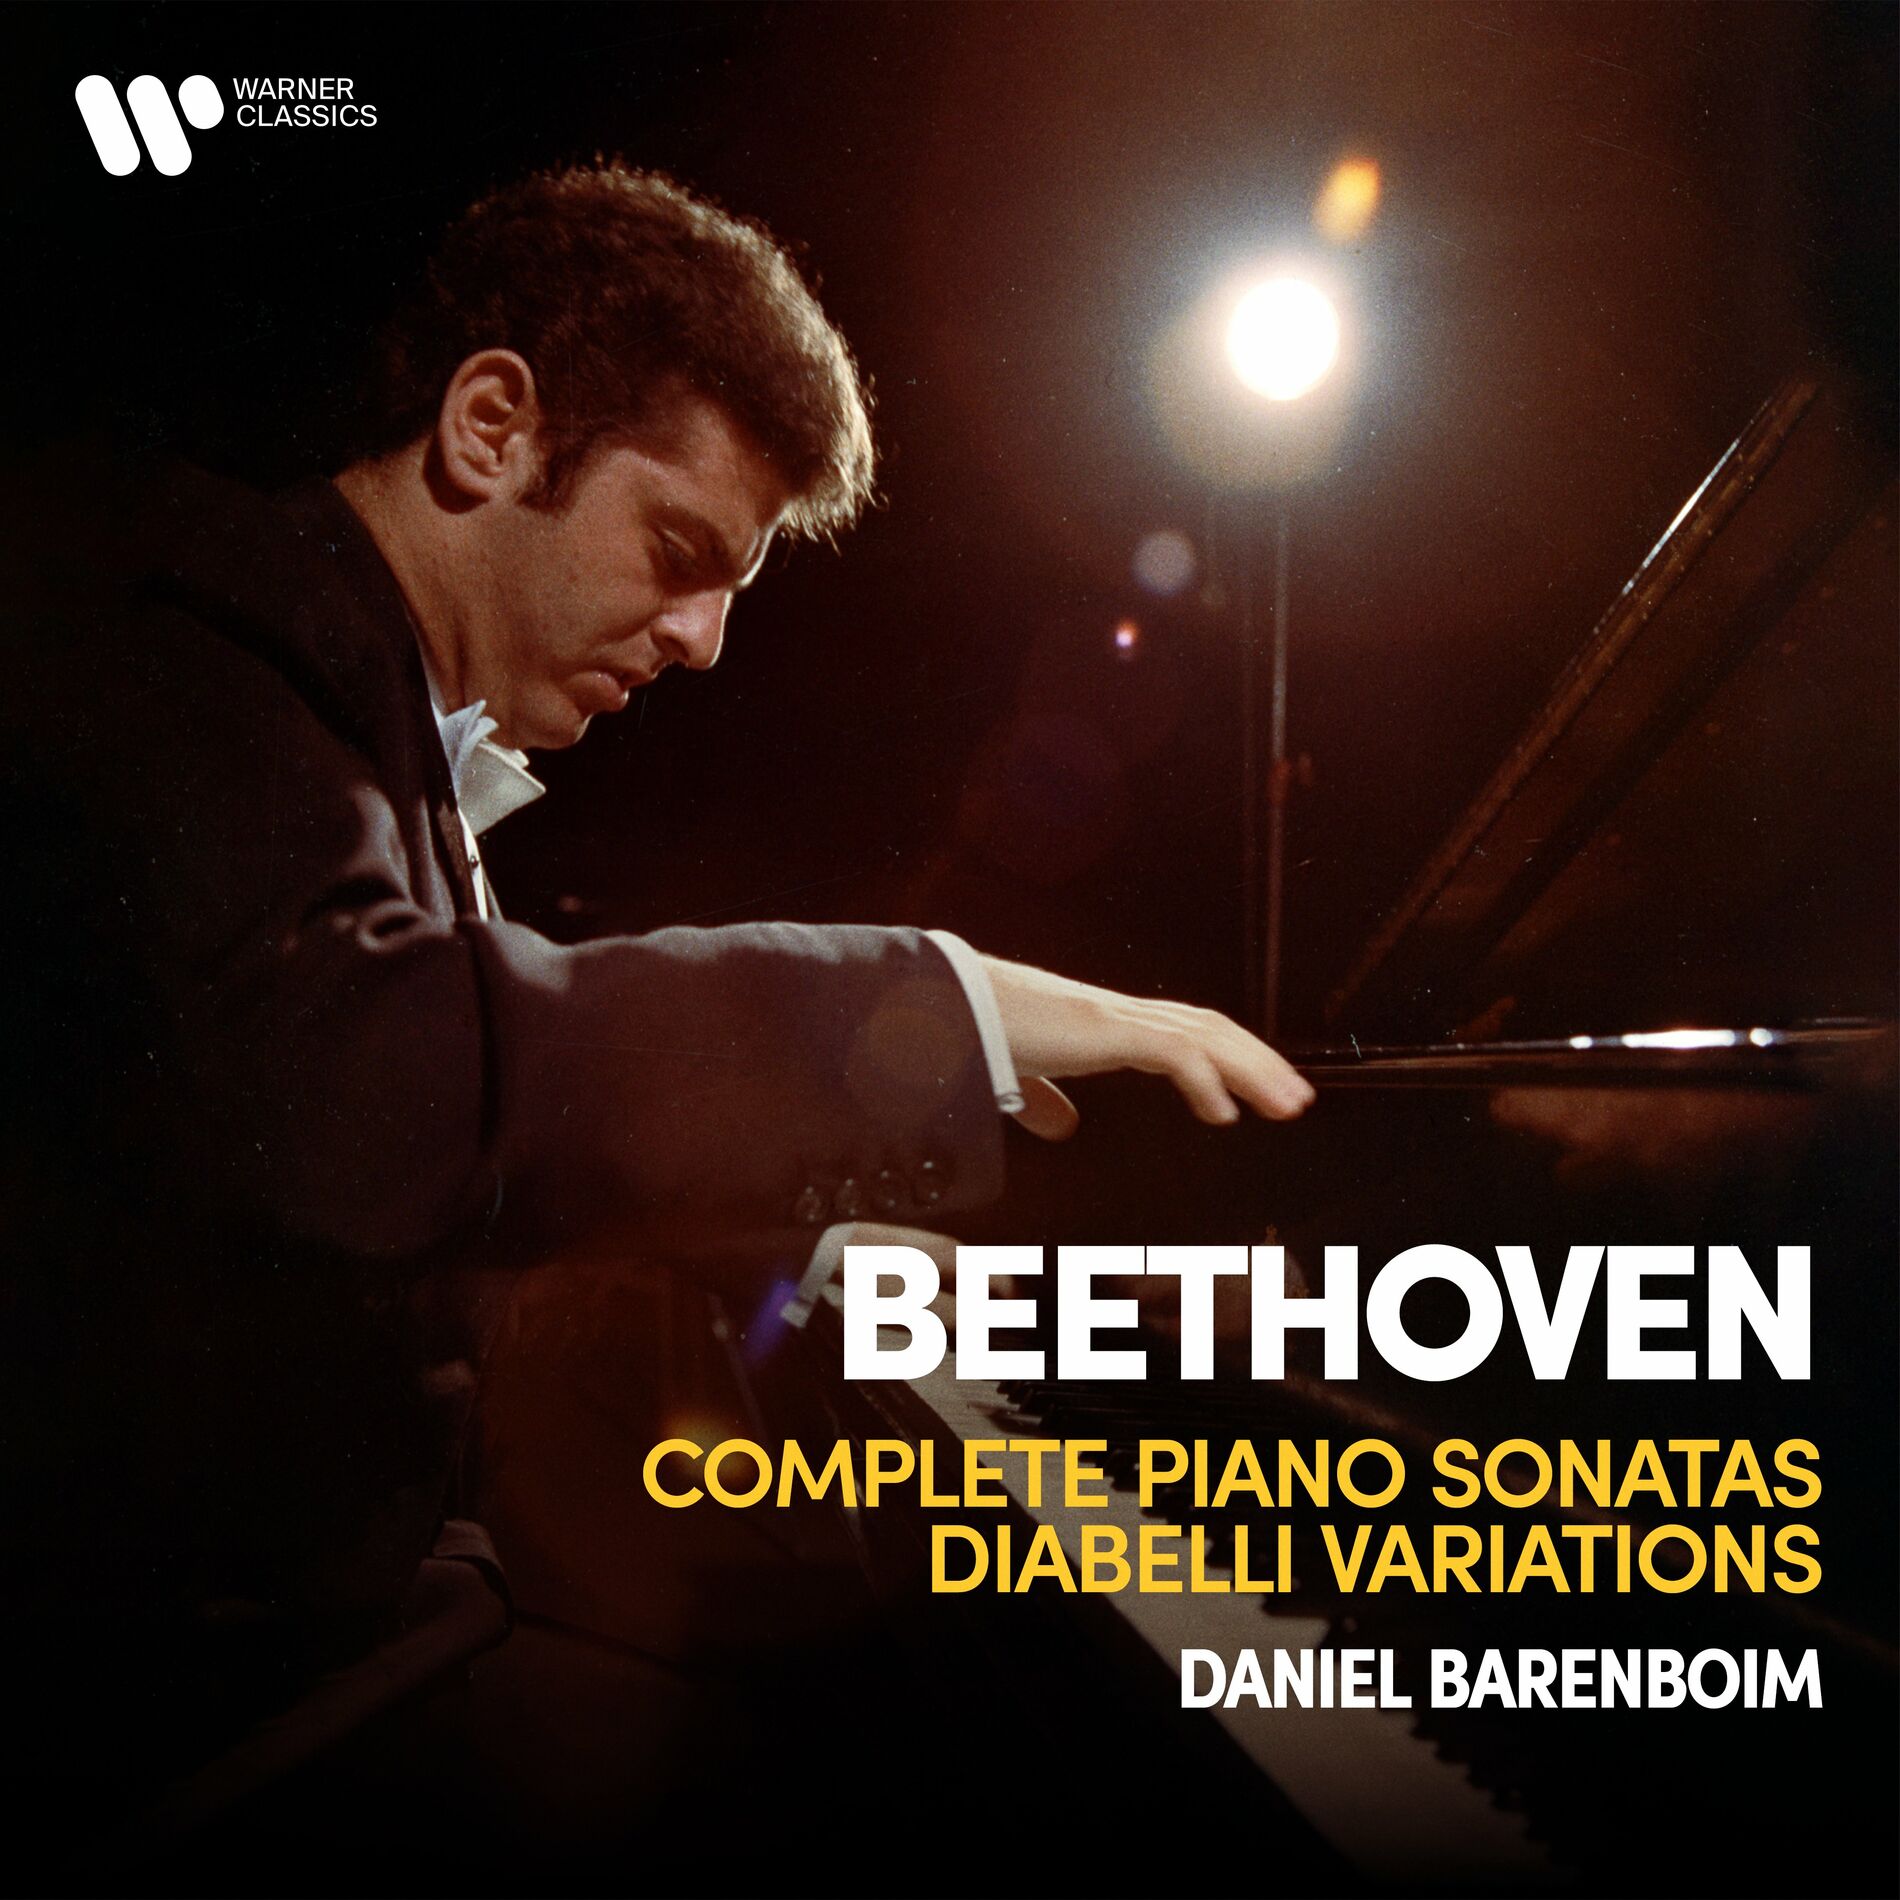 Daniel Barenboim - Beethoven: Complete Piano Sonatas u0026 Diabelli Variations:  lyrics and songs | Deezer